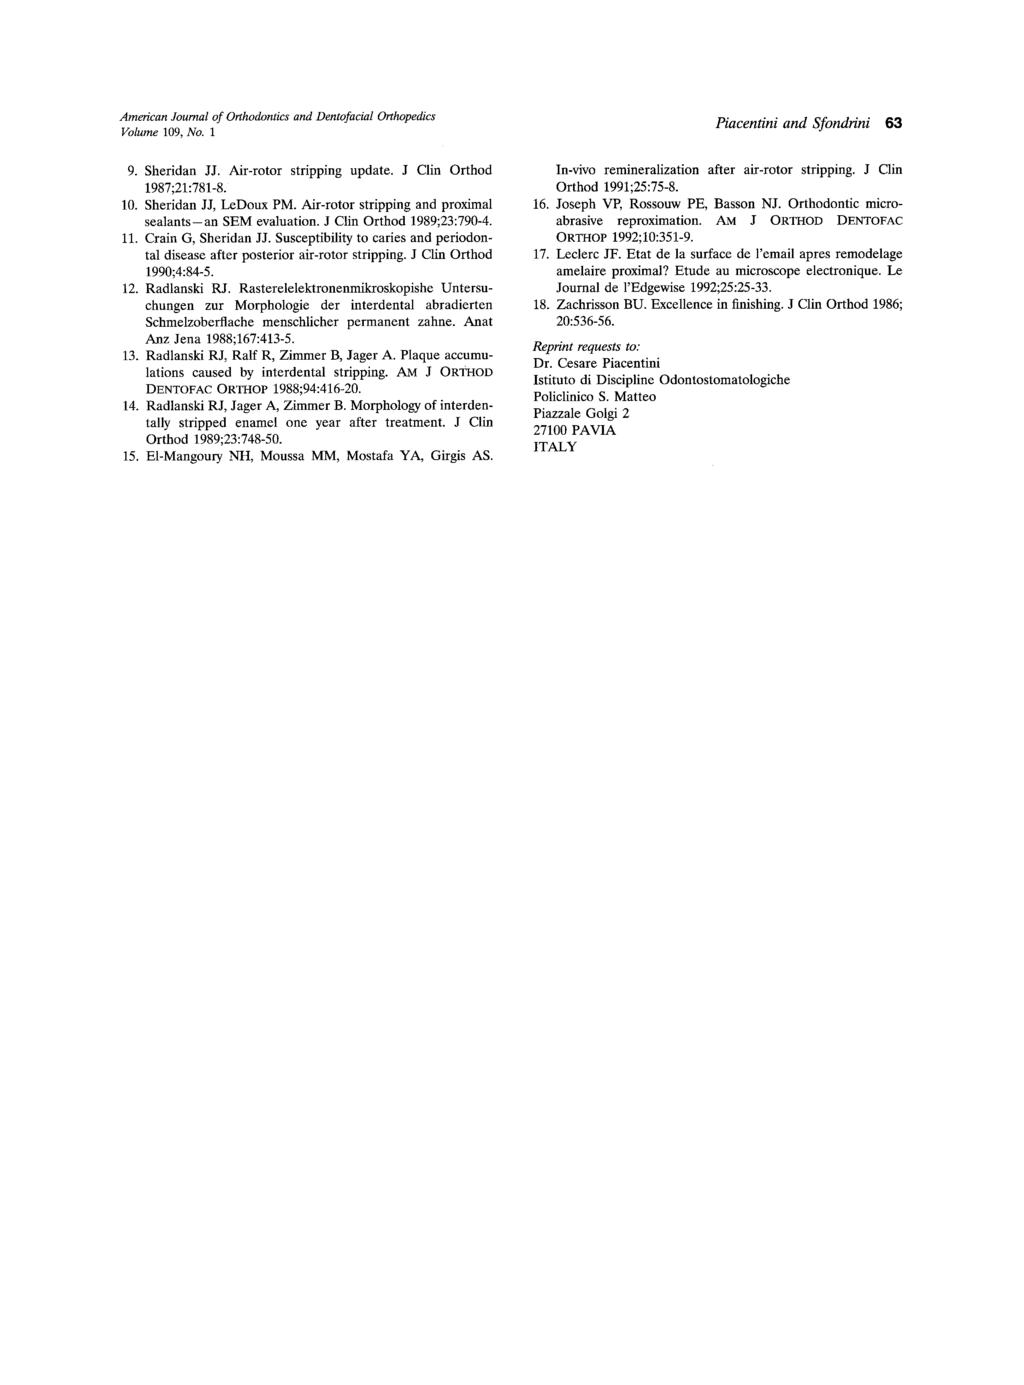 American Journal of Orthodontics and Dentofacial Orthopedics Piacentini and Sfondrini 63 Volume 109, No. 1 9. Sheridan JJ. Air-rotor stripping update. J Clin Orthod 1987;21:781-8. 10. Sheridan J J, LeDoux PM.